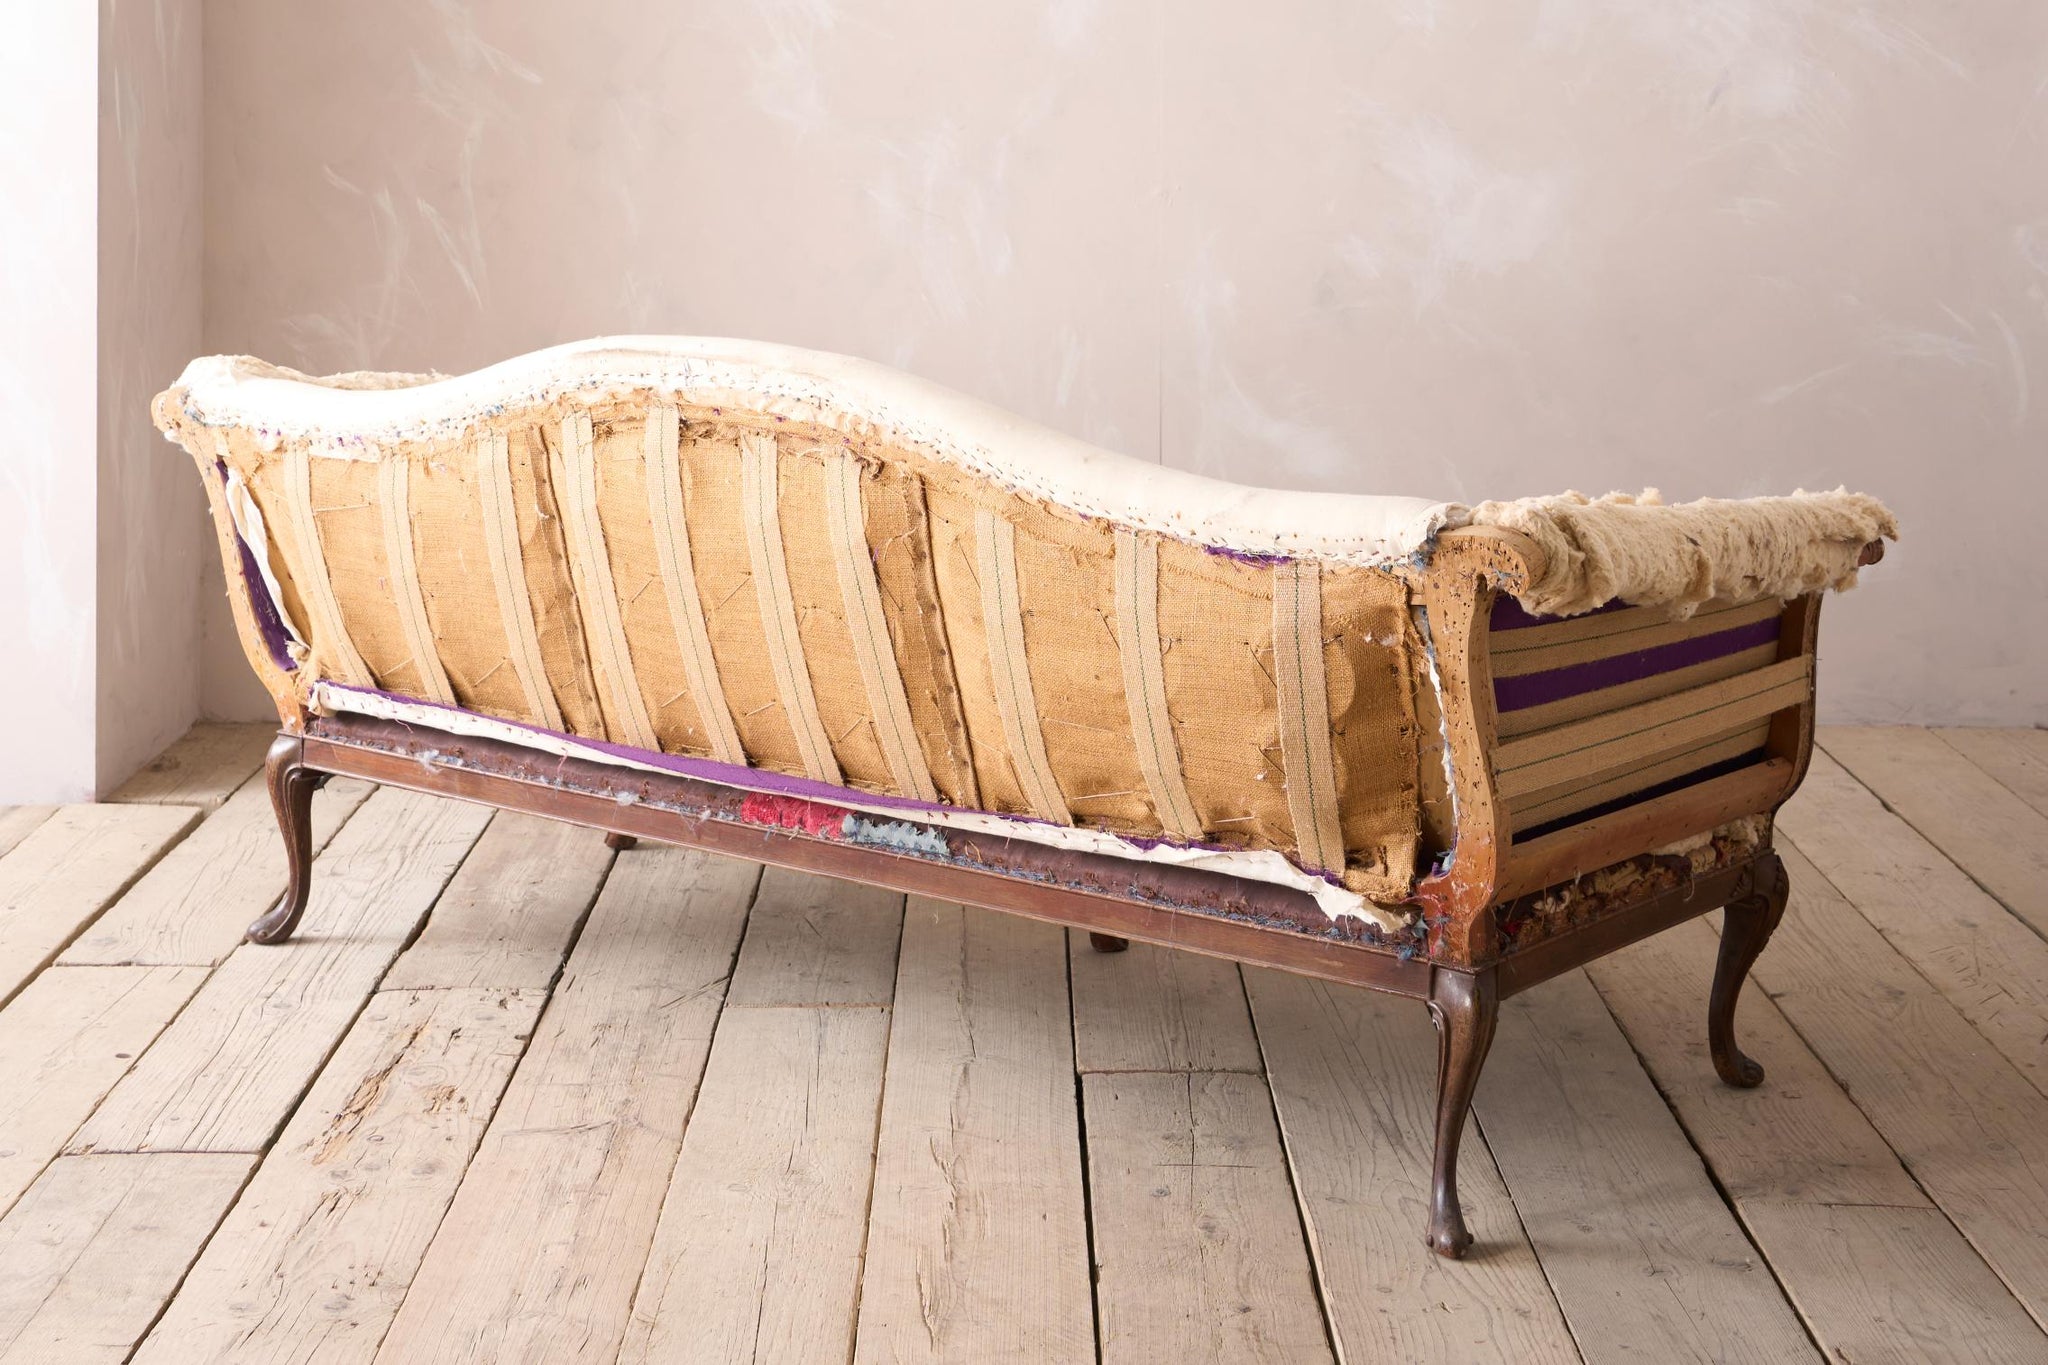 20th century Georgian style Camel backed sofa